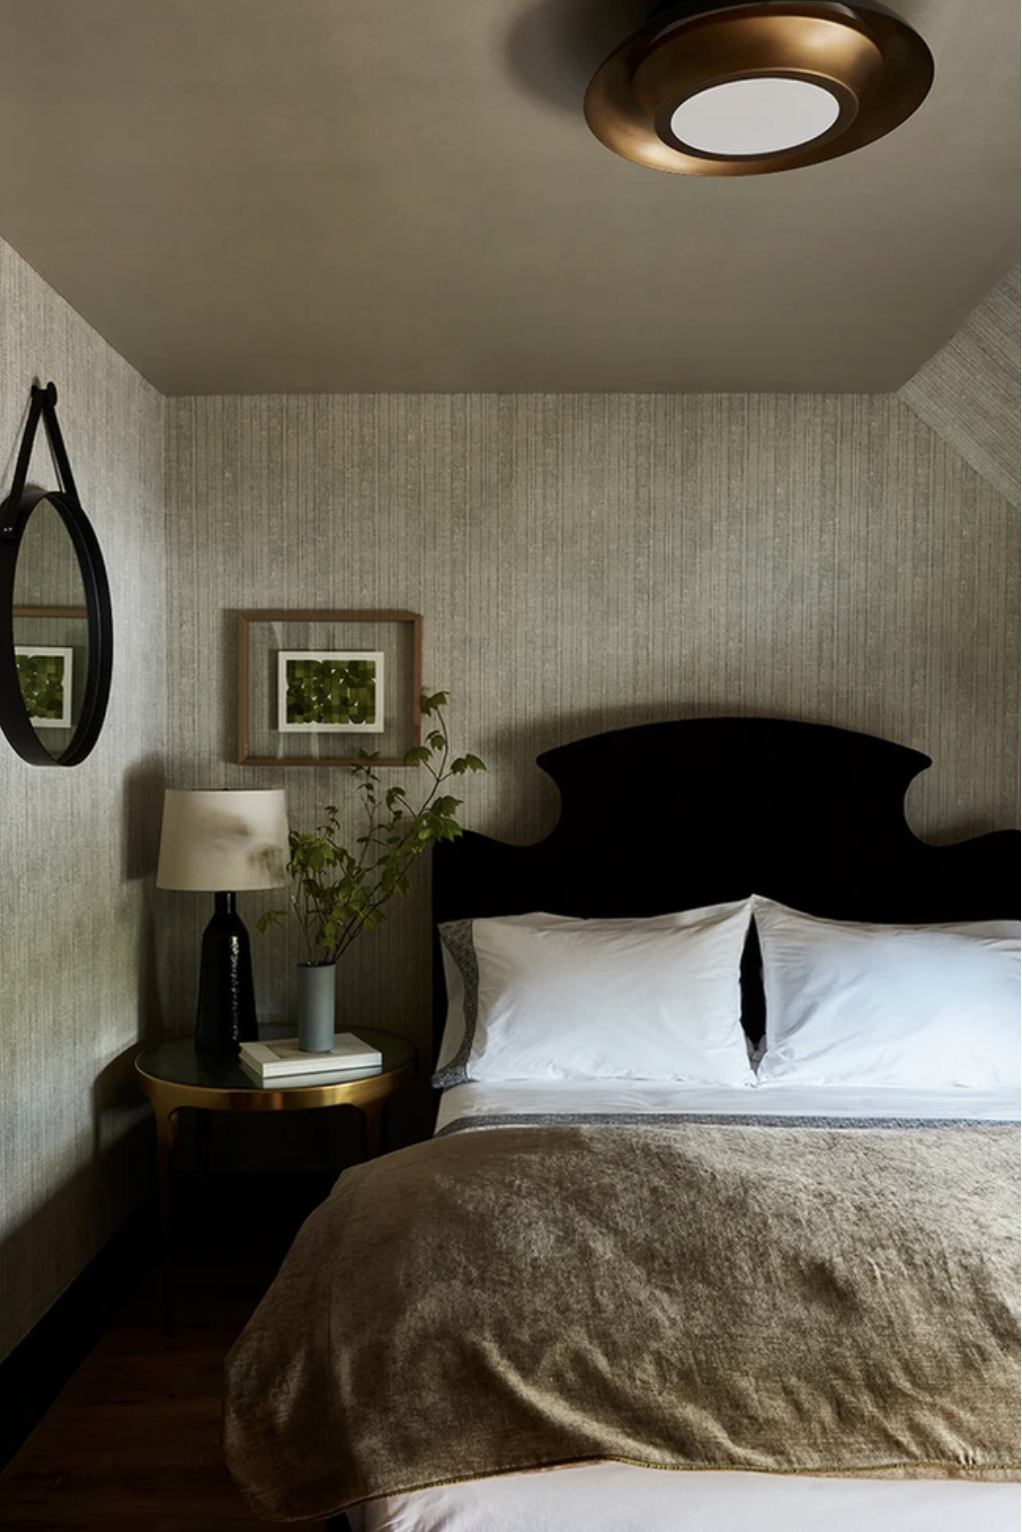 moody bedroom design with modern lighting